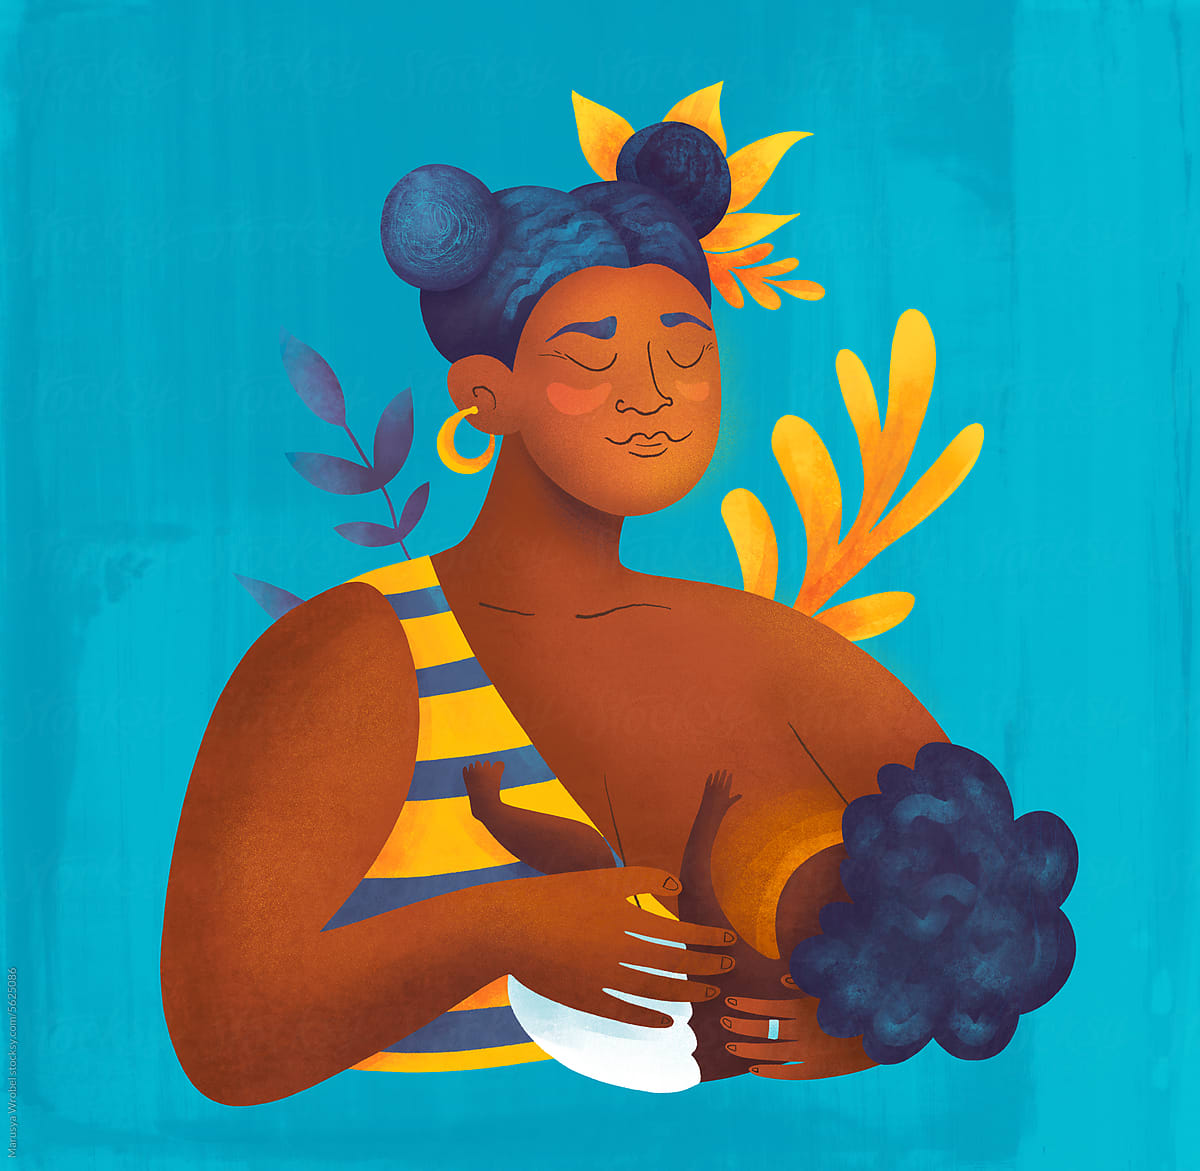 Motherhood Breastfeeding concept illustration